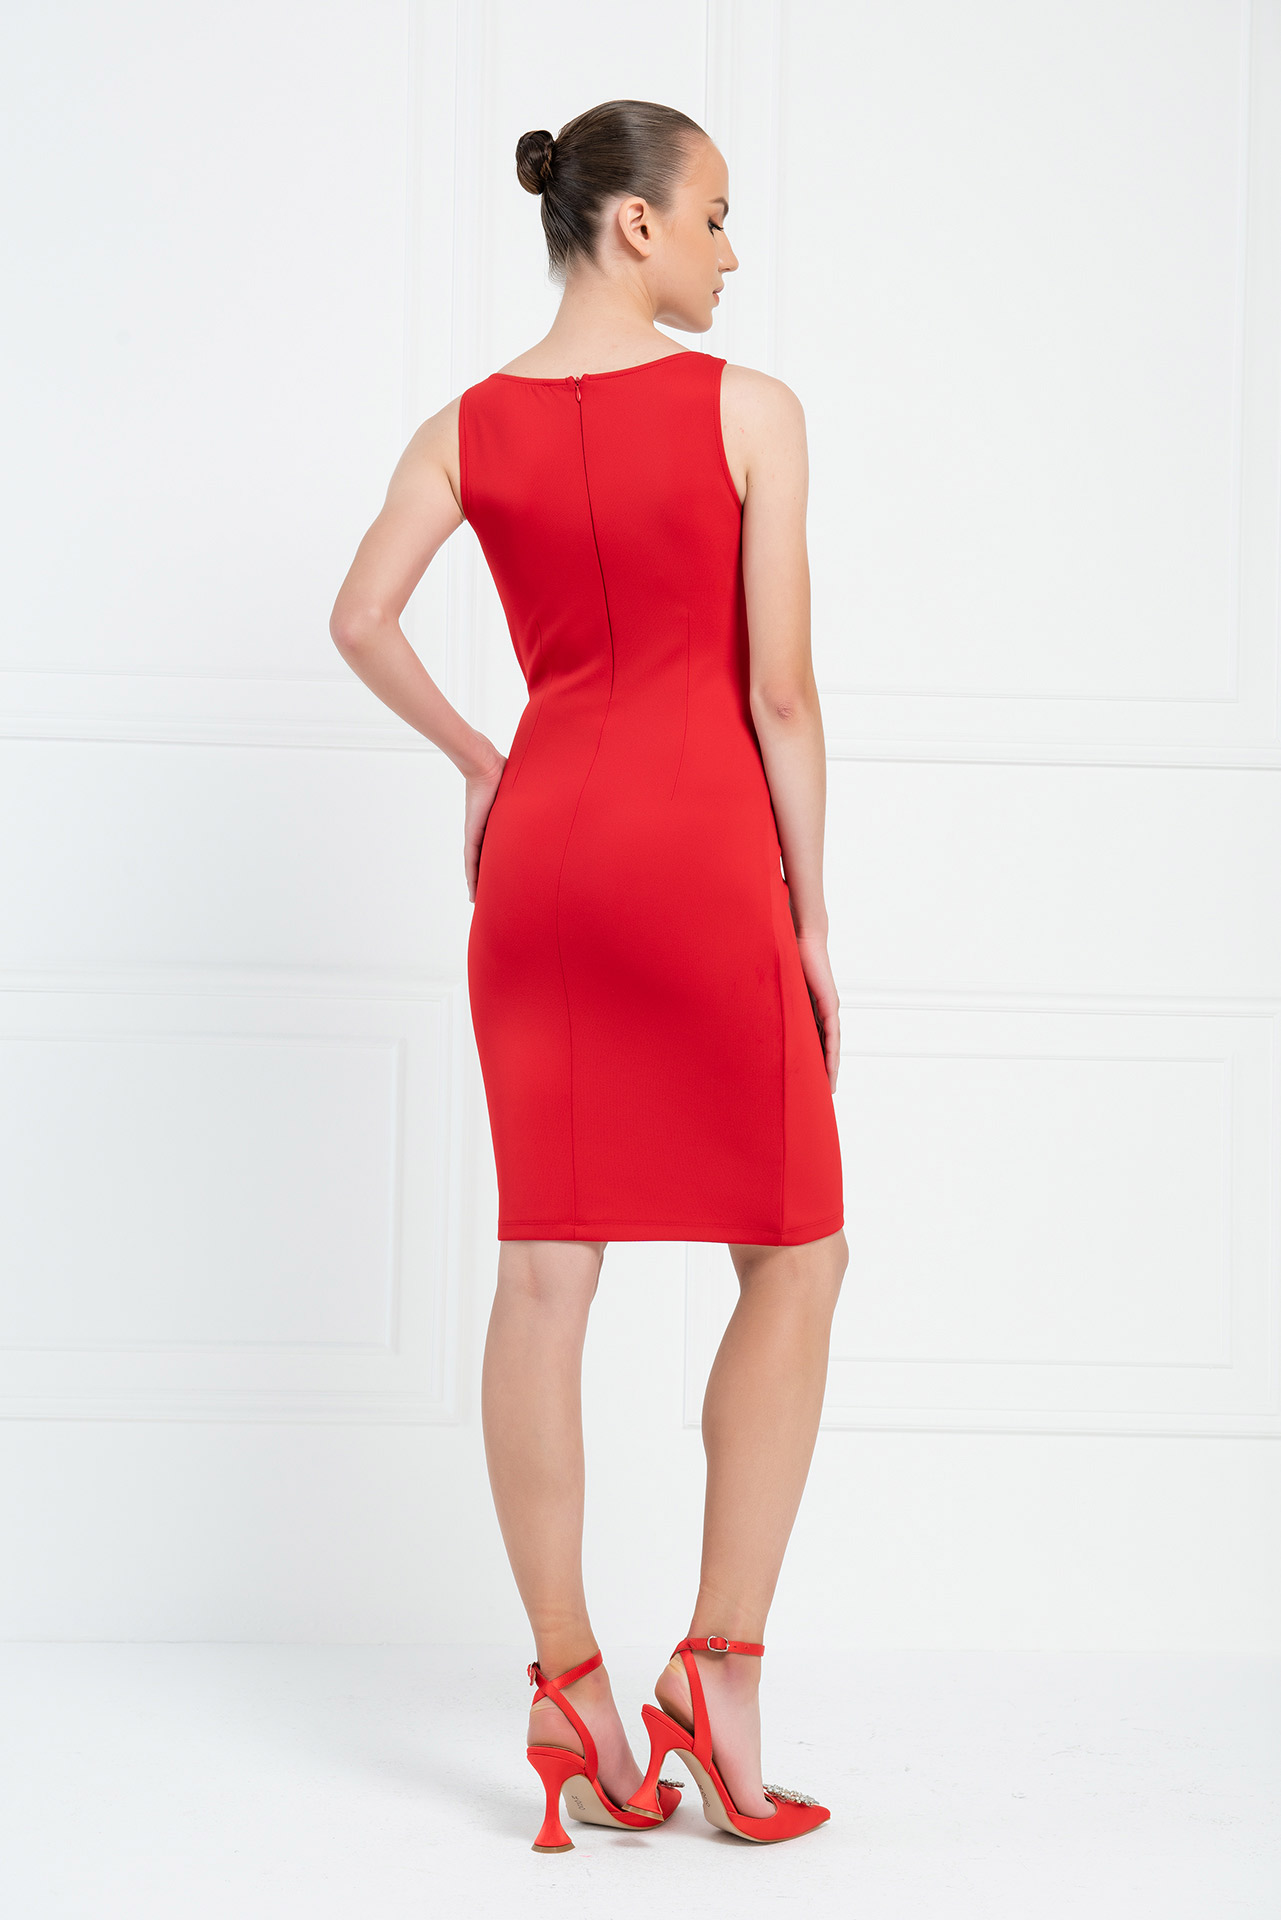 Wholesale Red V-Neck Sleeveless Dress